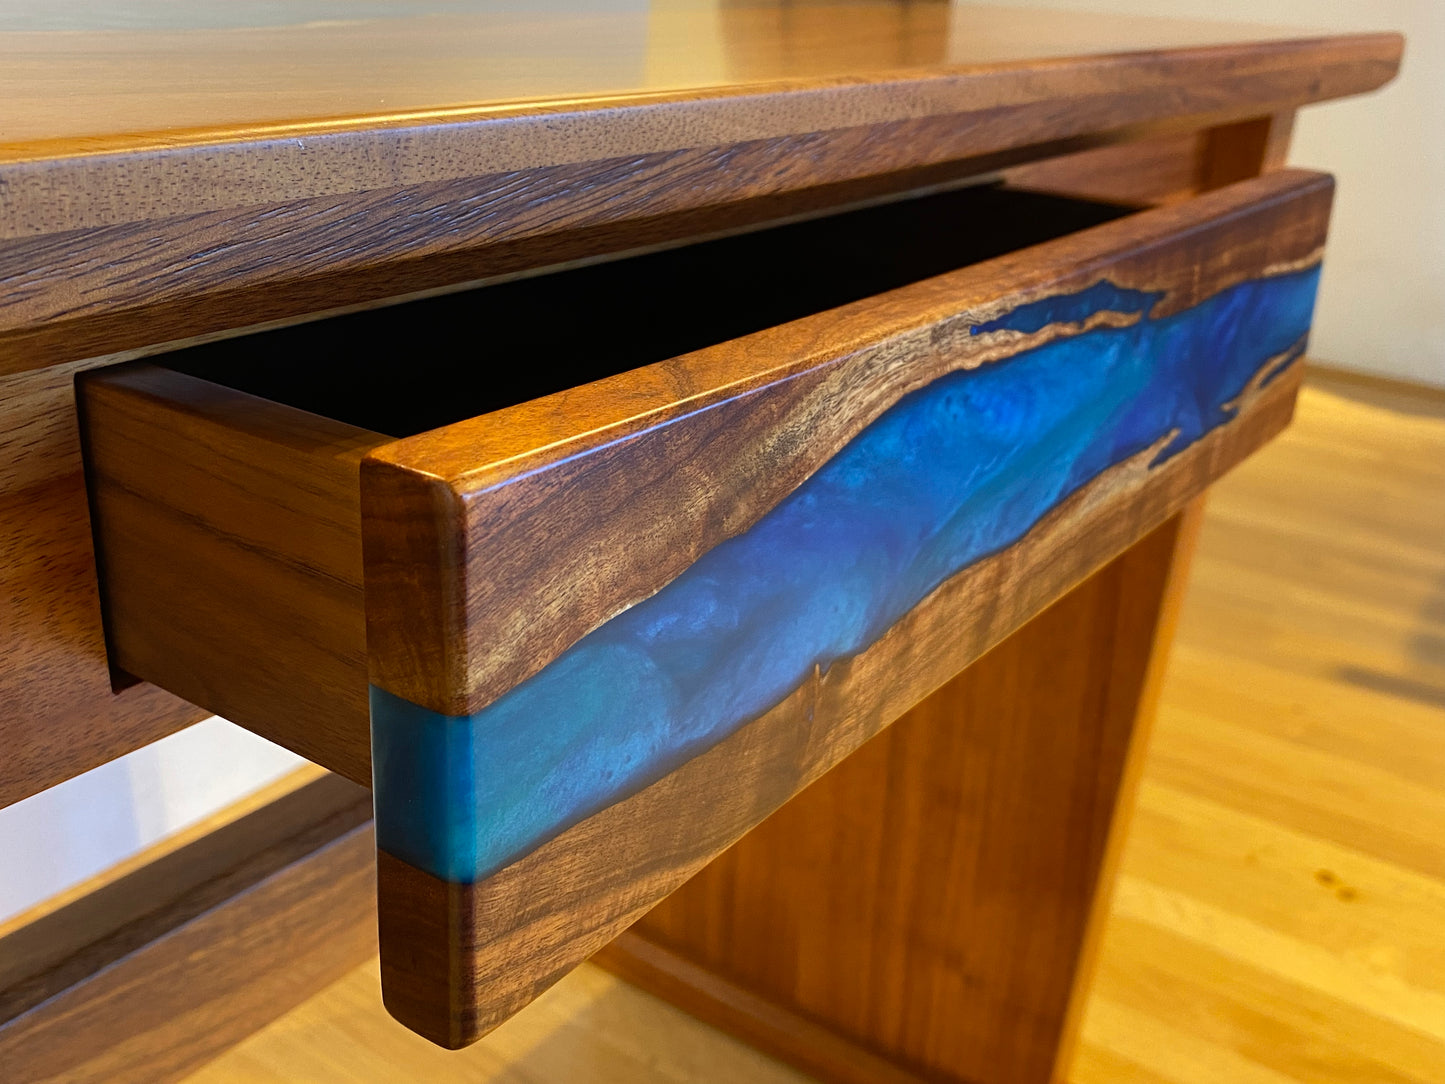 Ocean currents Koa Wood and Resin Desk